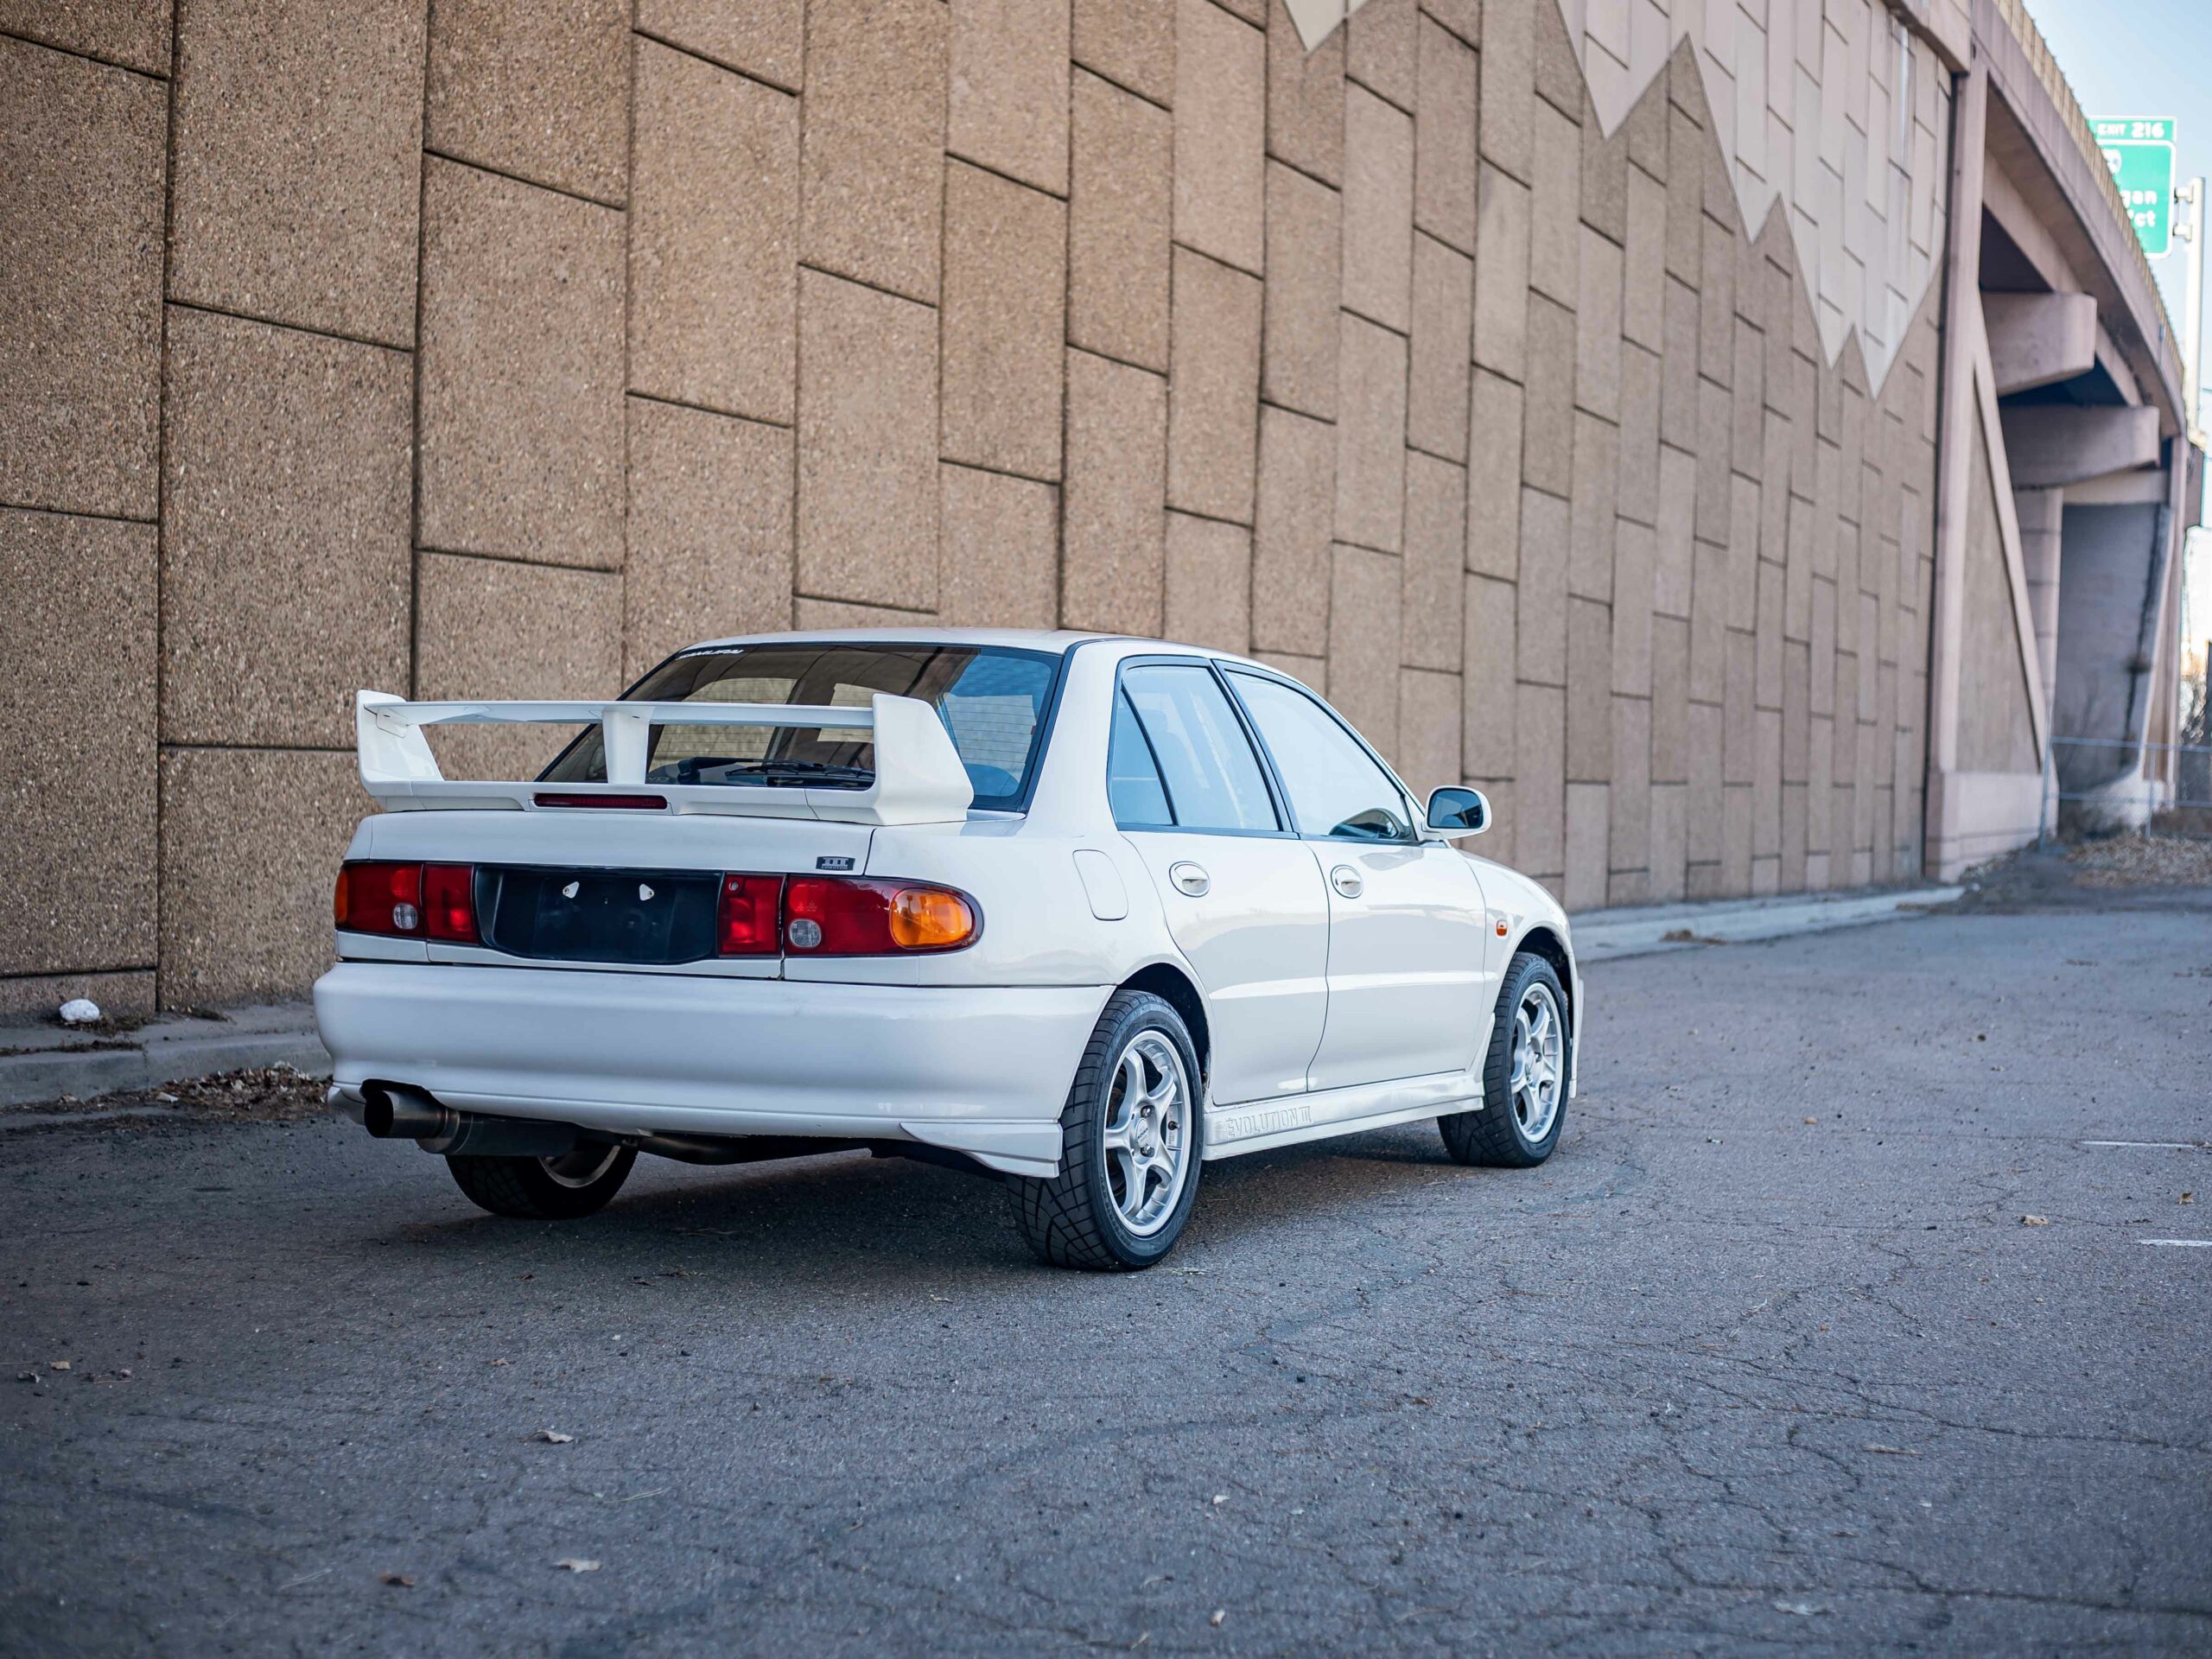 1995 Mitsubishi Lancer GSR Evolution III: A Car Ahead of Its Time